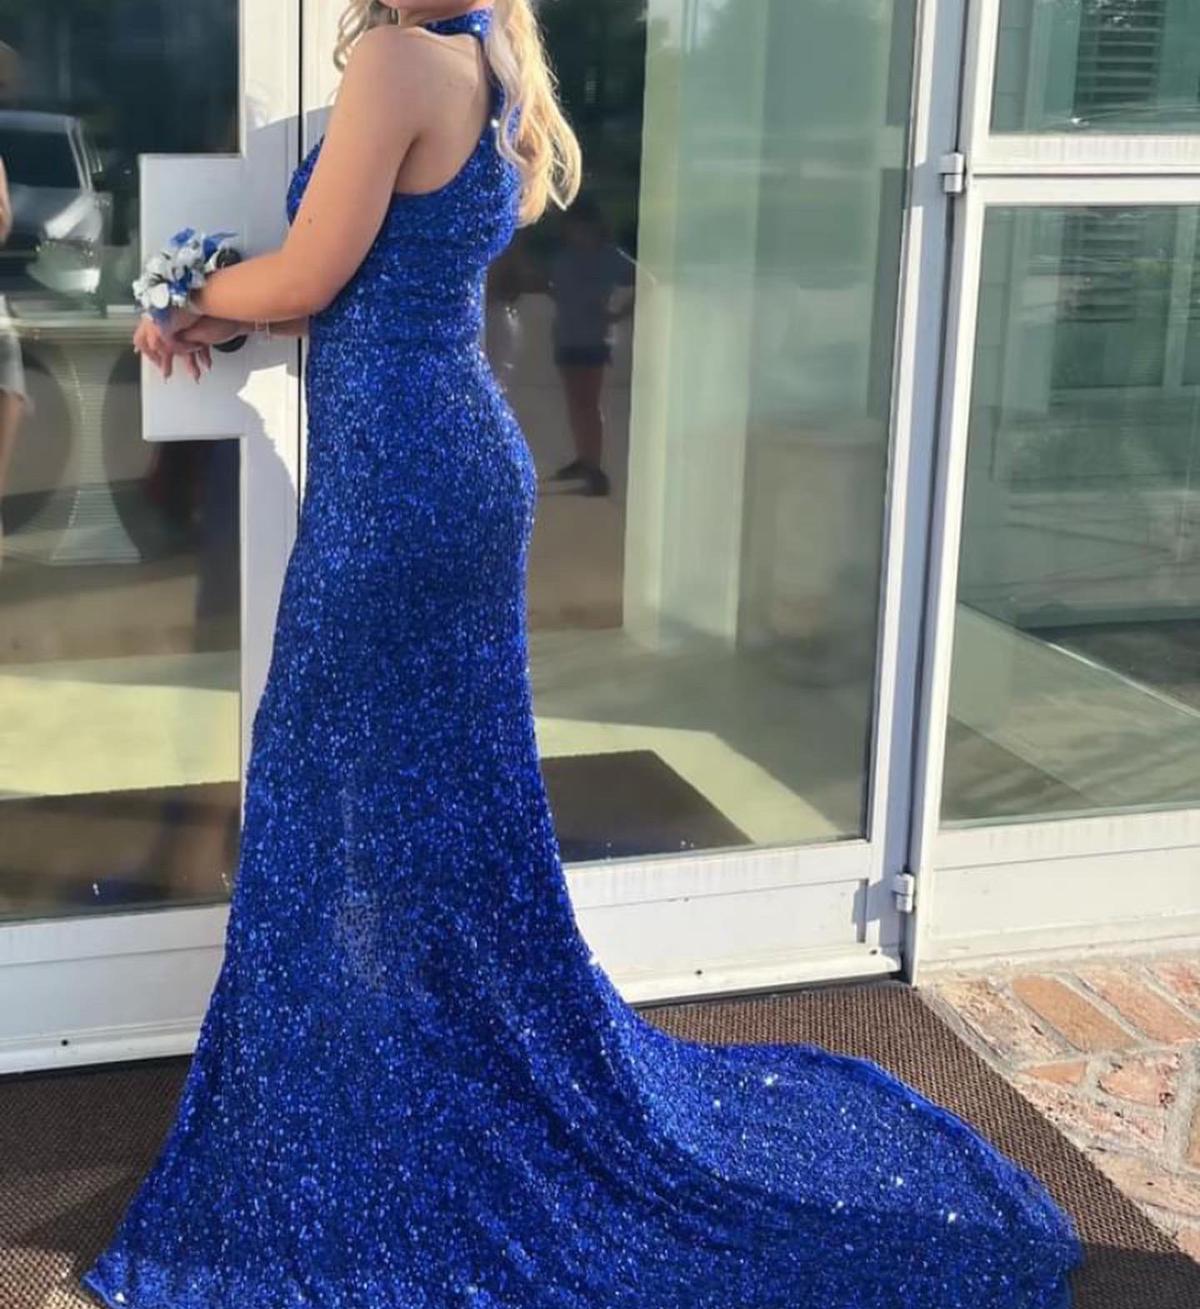 Ashley Lauren Size 2 Prom High Neck Sequined Royal Blue Side Slit Dress on Queenly